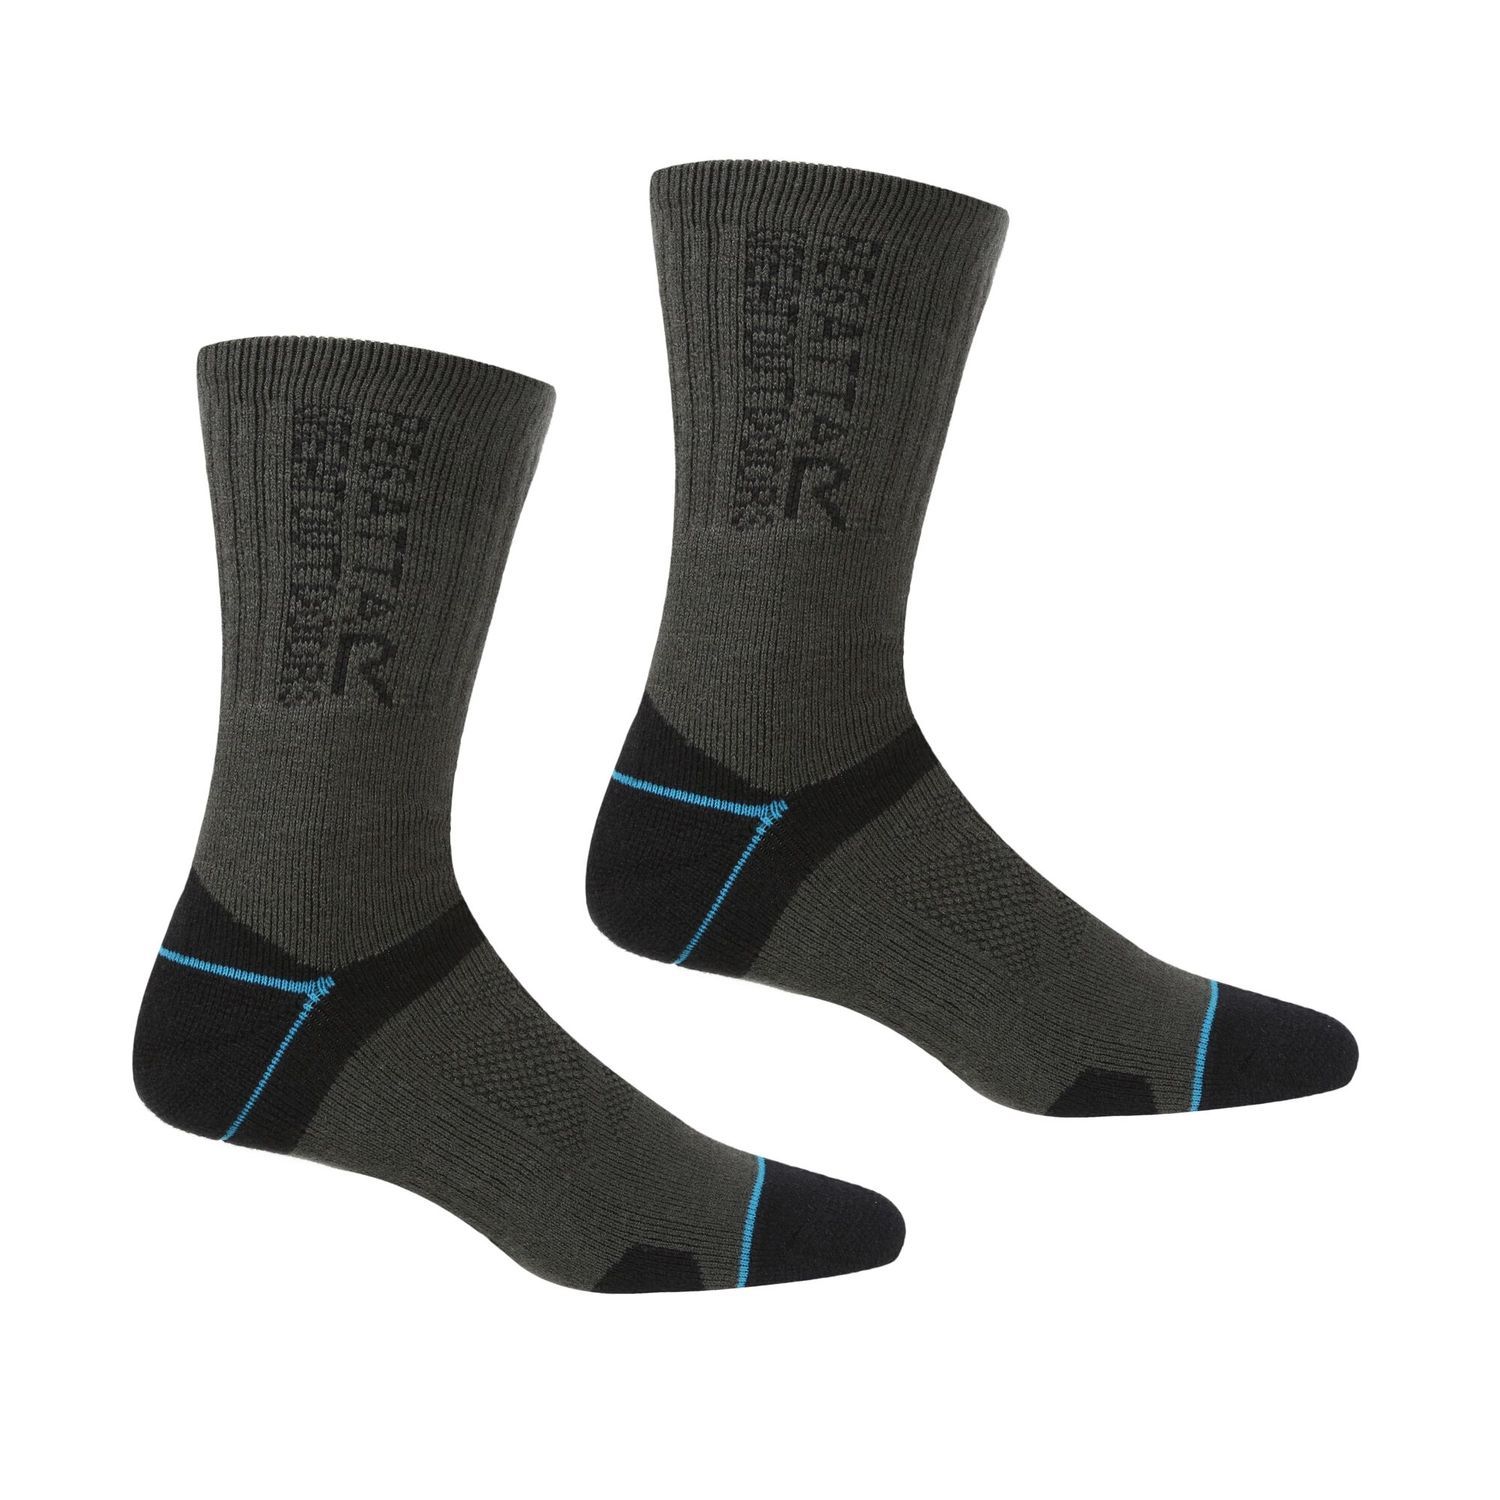 Regatta Blister Protect II Walking Socks (Black/Ash)